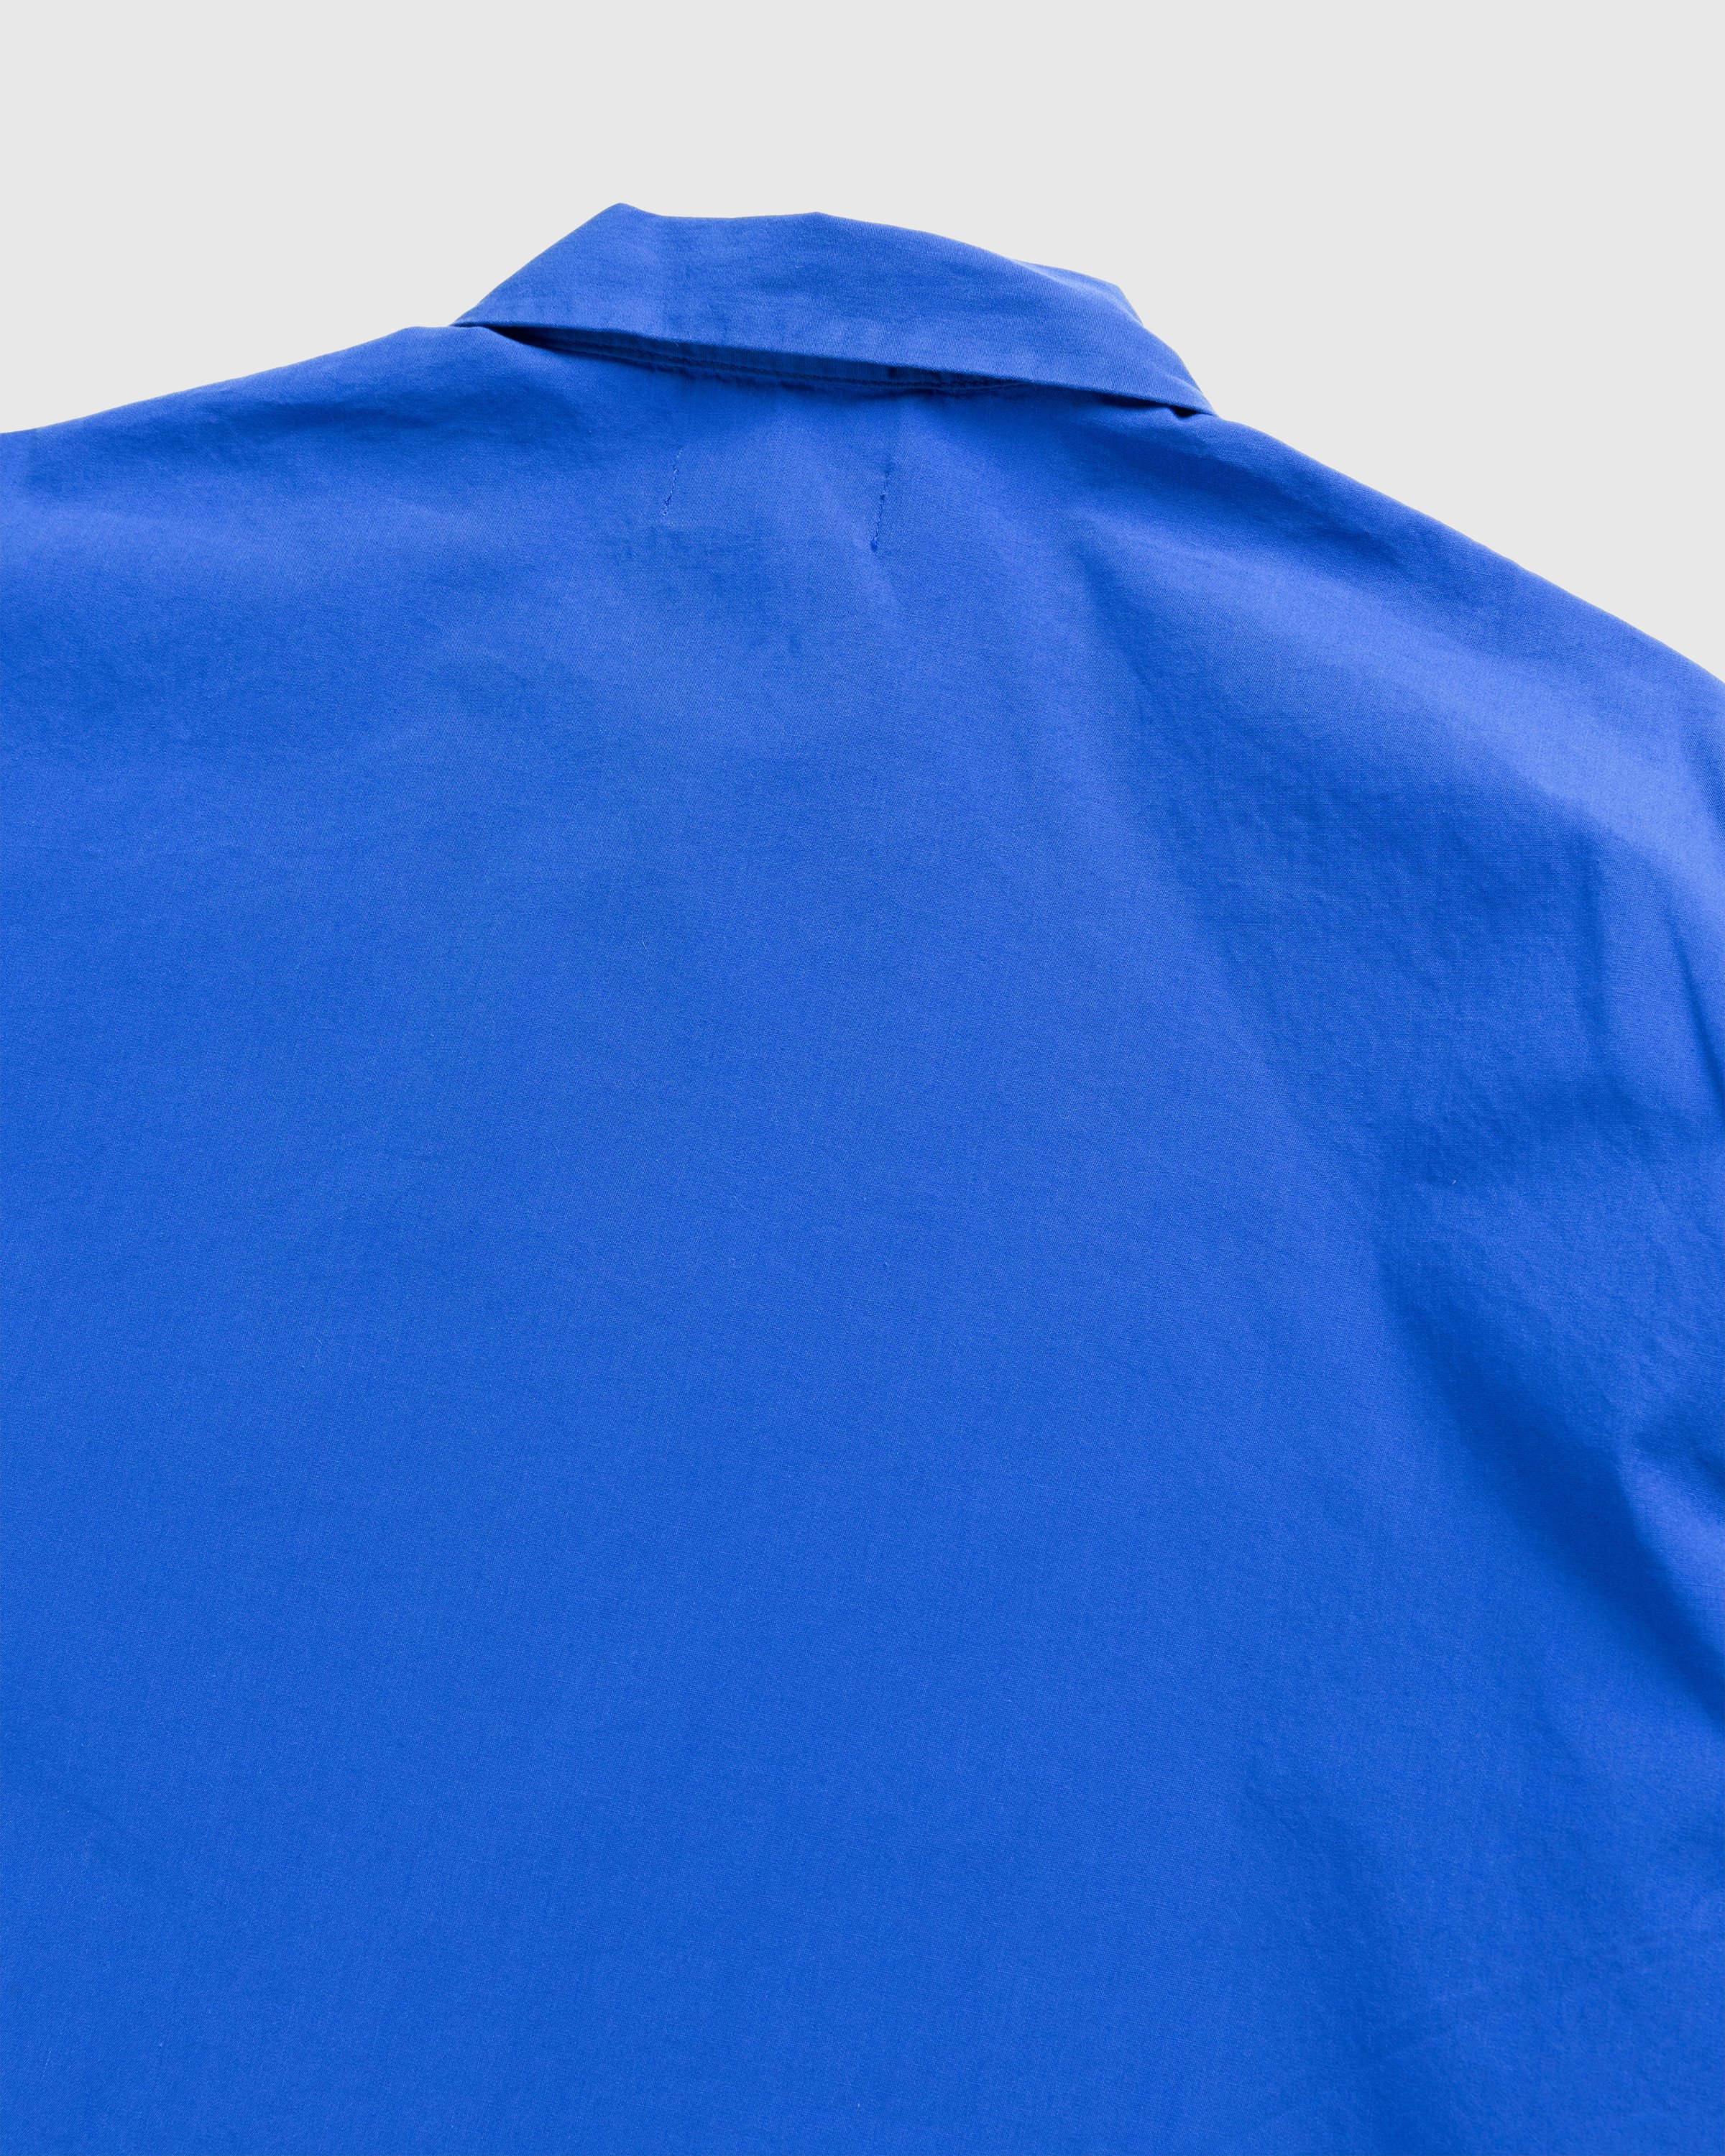 Tekla - Cotton Poplin Pyjamas Shirt Royal Blue - Clothing - Blue - Image 5